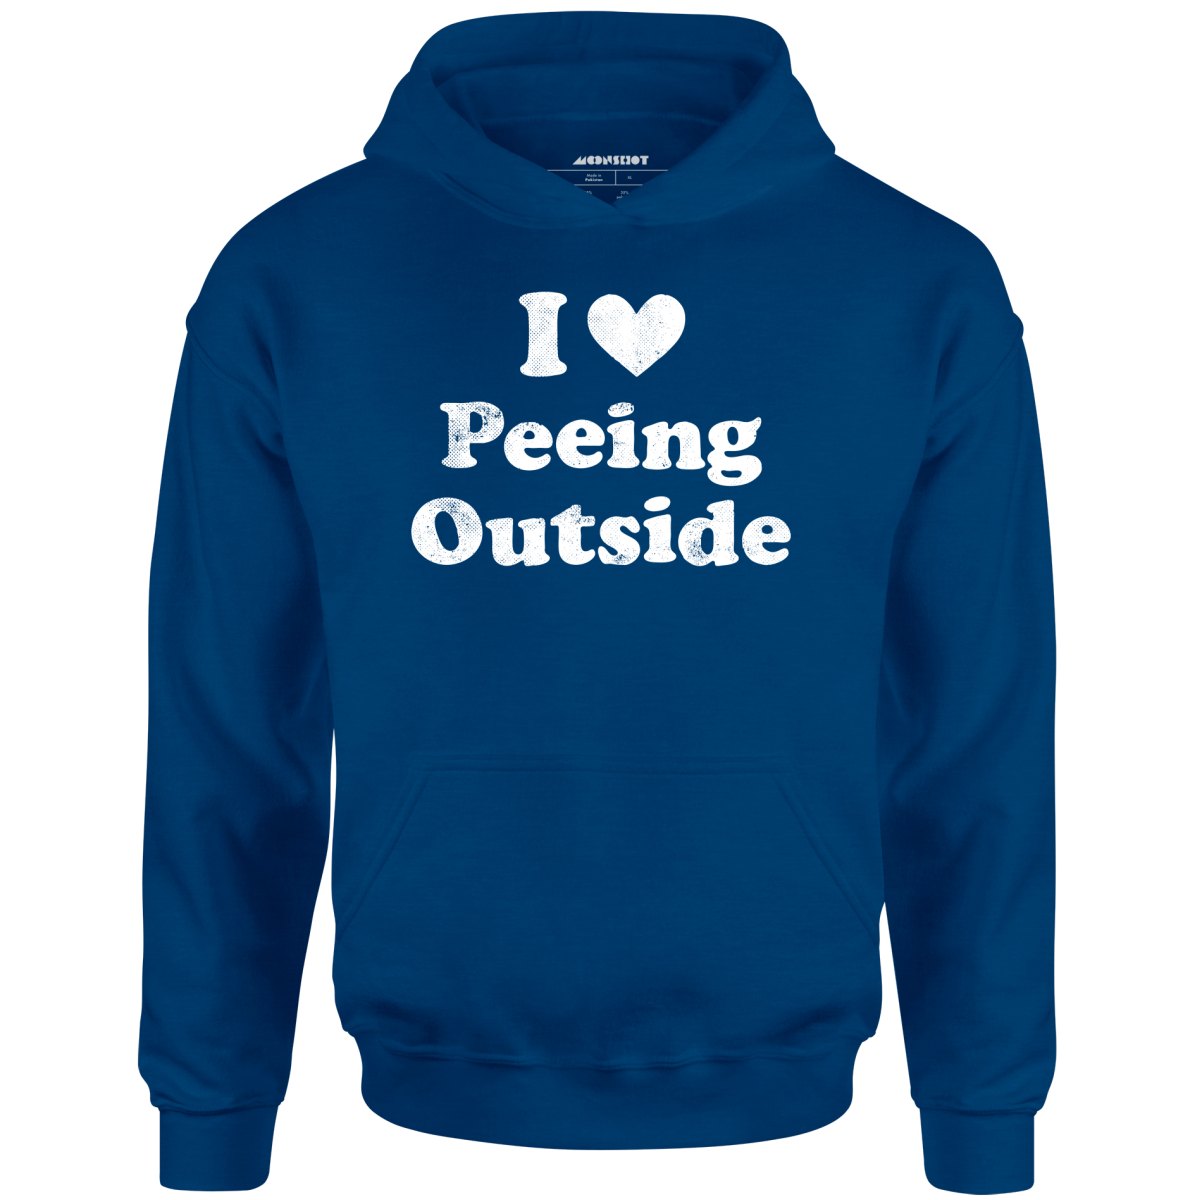 I Love Peeing Outside - Unisex Hoodie